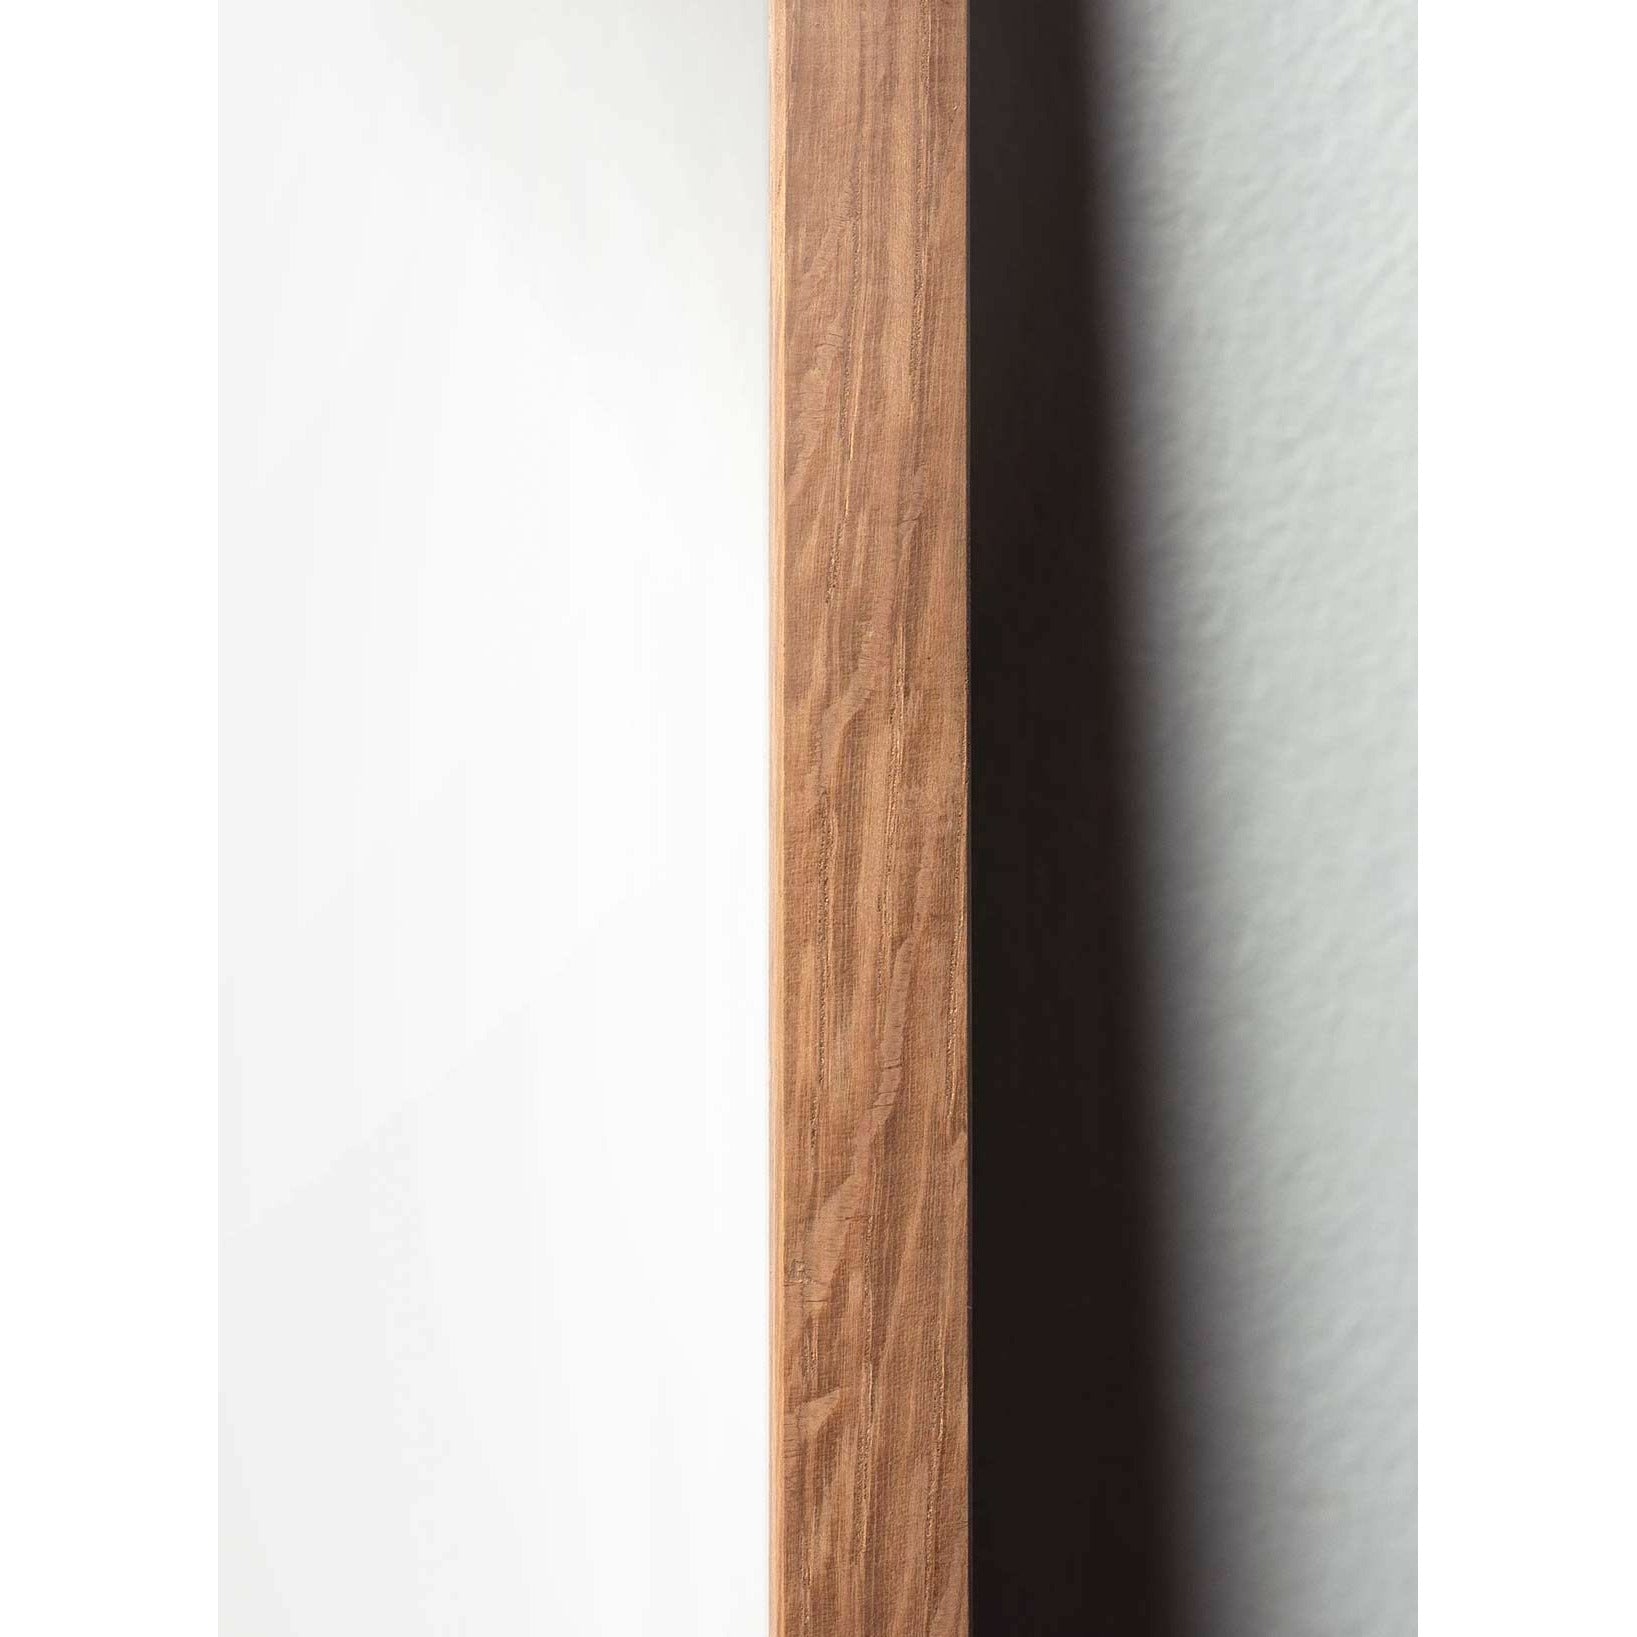 Brainchild Äggfiguraffisch, ram i lätt trä 30x40 cm, svart